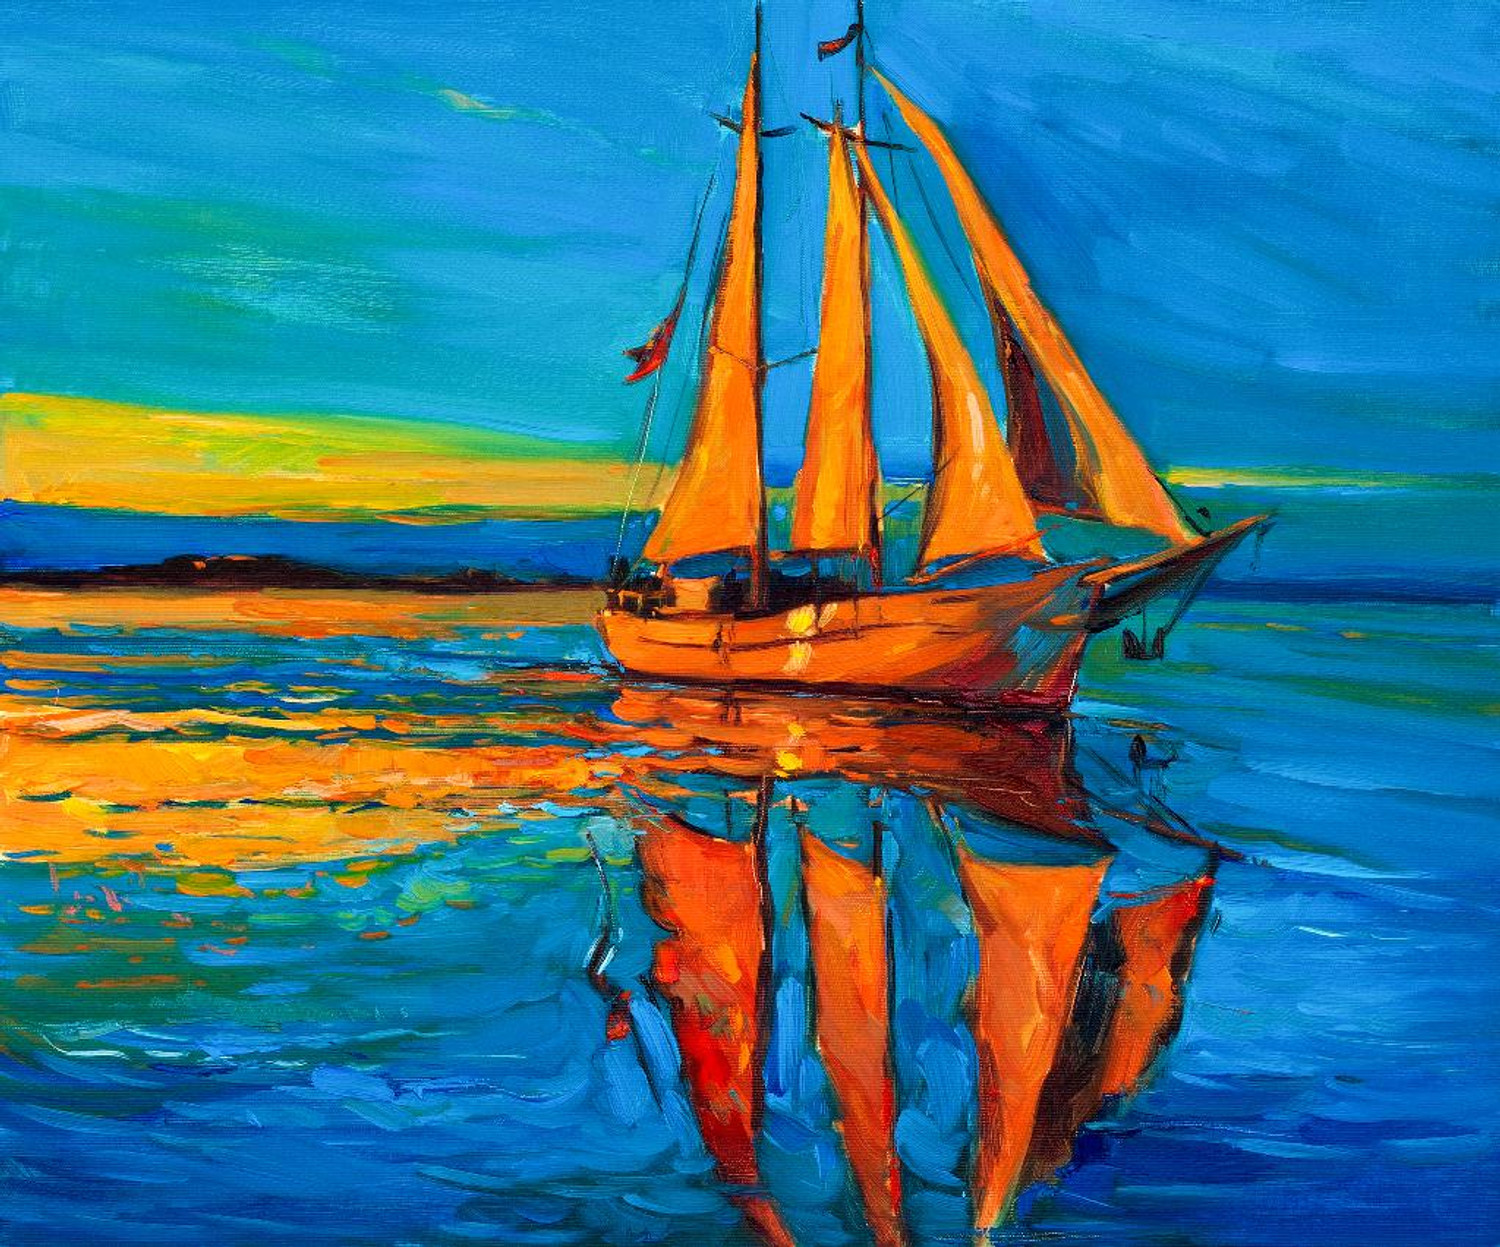 Speedboat Canvas Print / Canvas Art by CSA Images - Pixels Canvas Prints